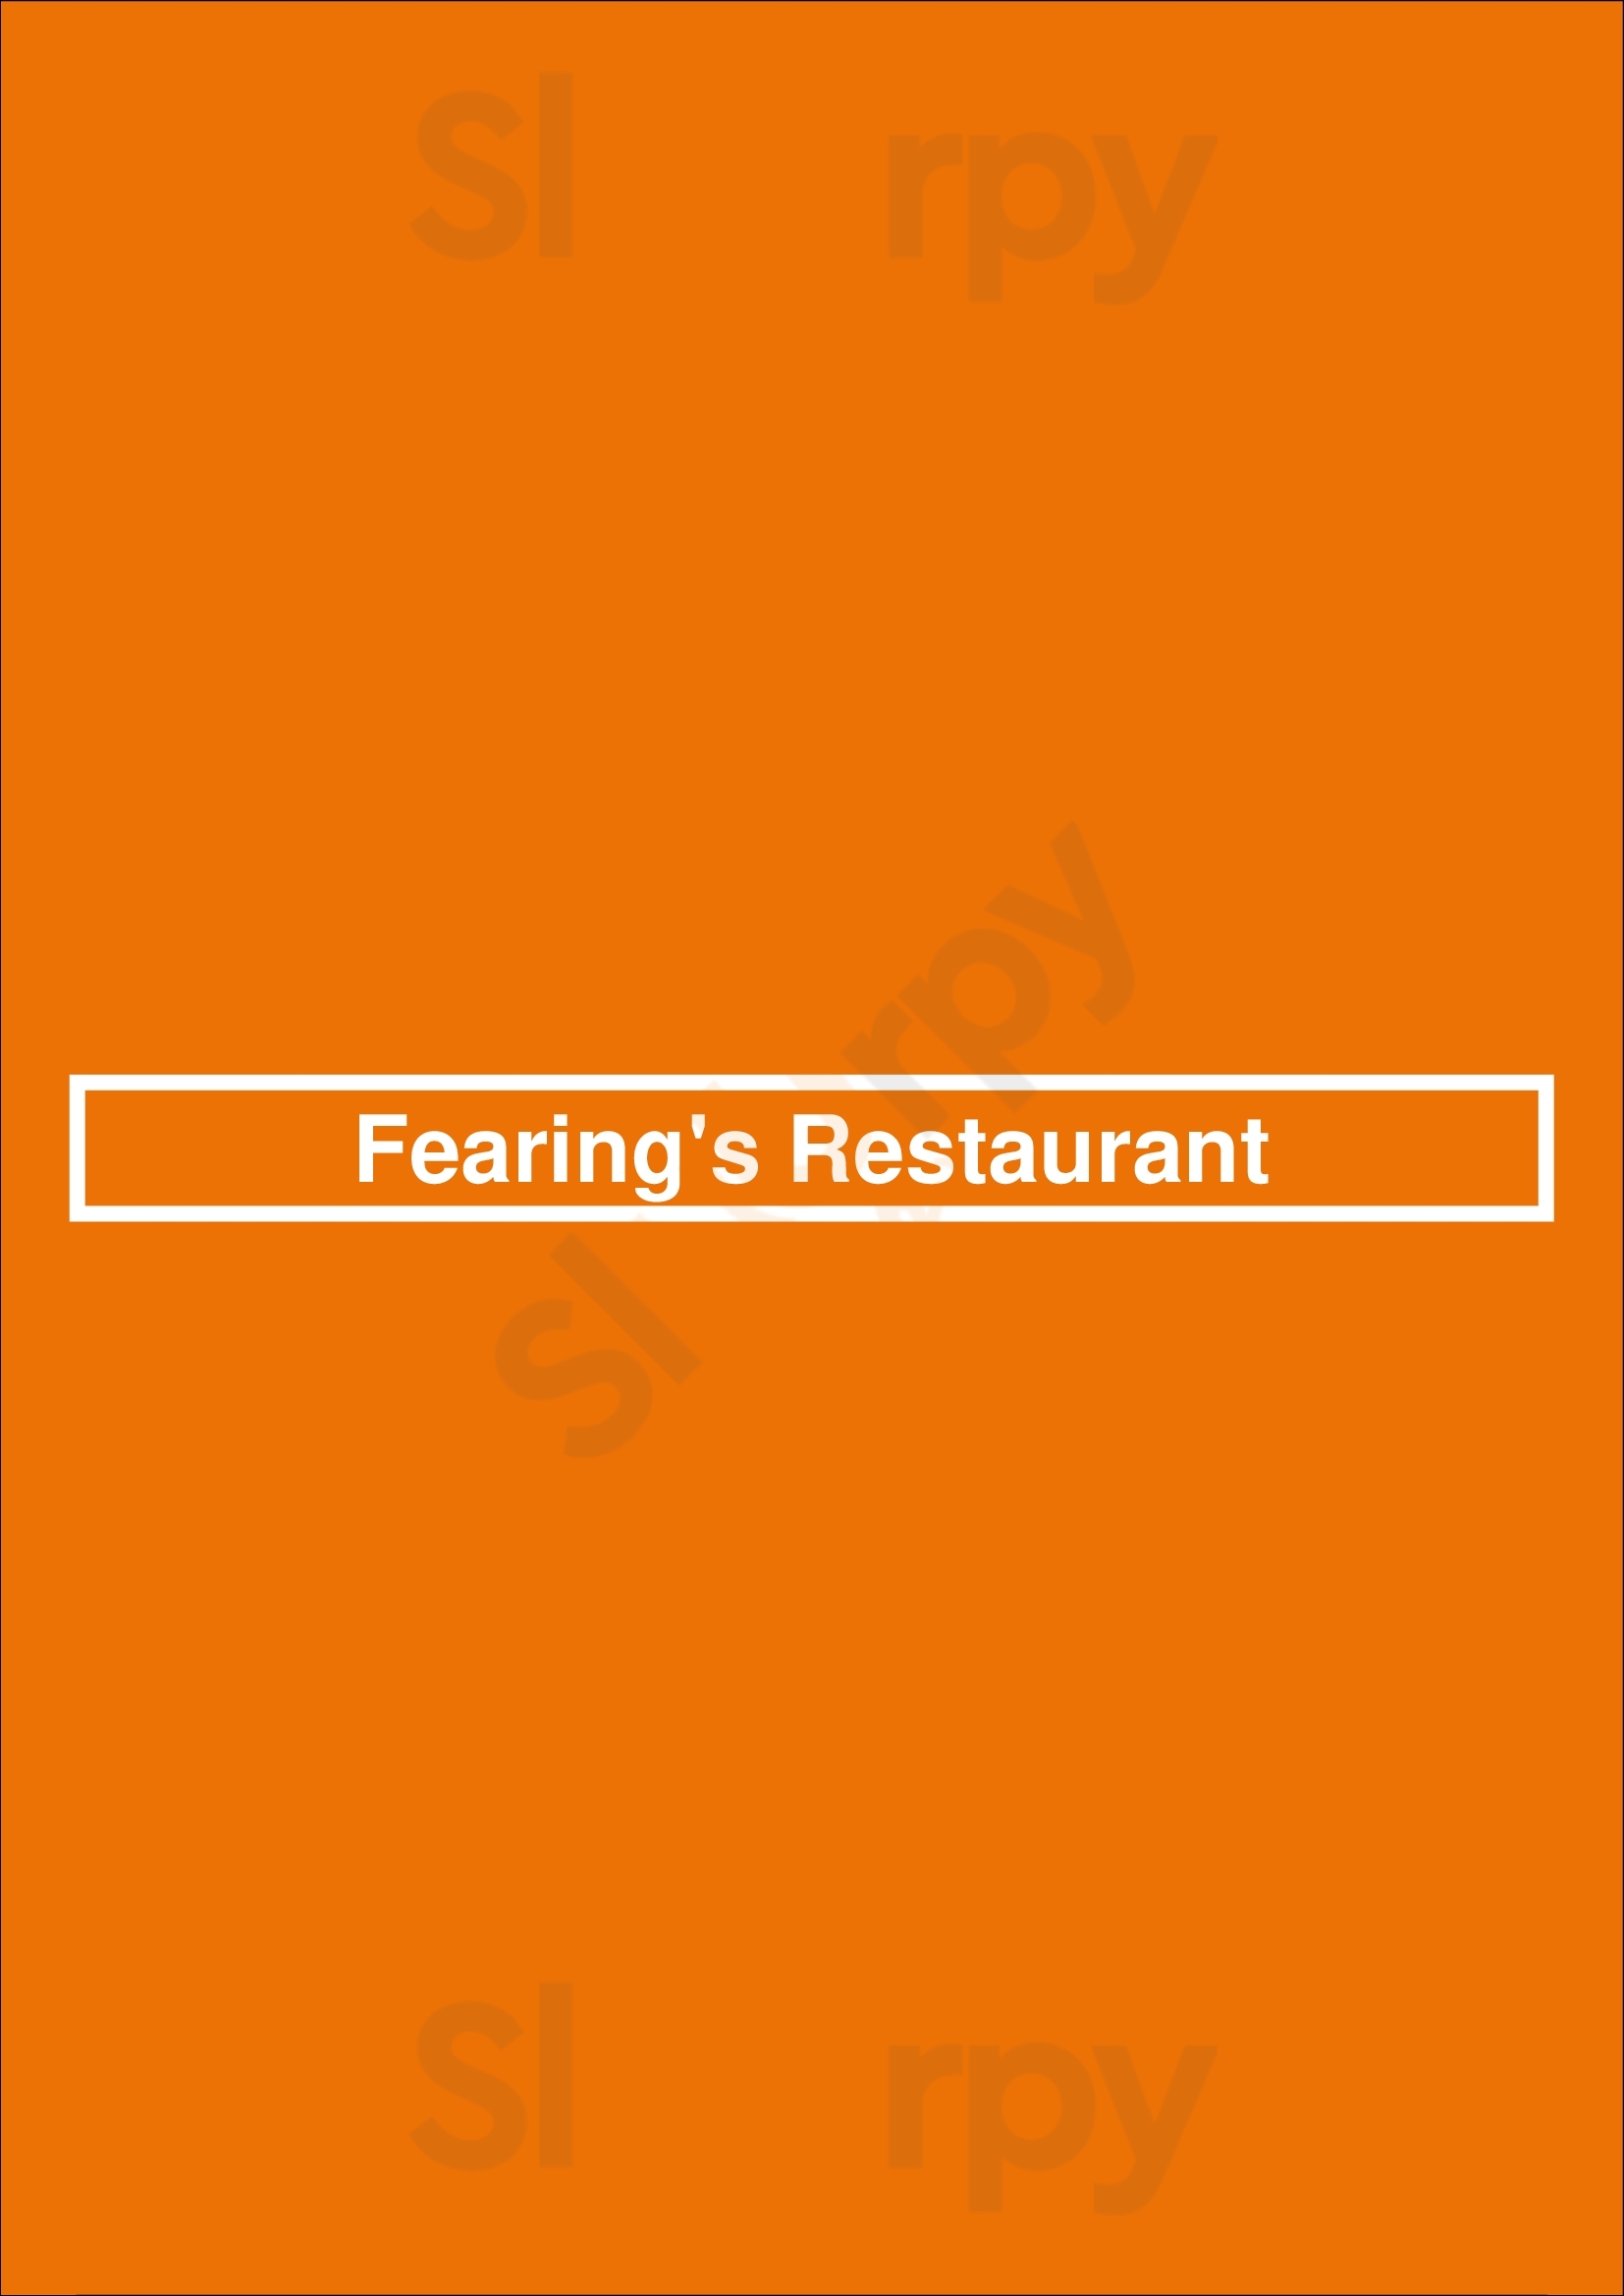 Fearing's Restaurant Dallas Menu - 1